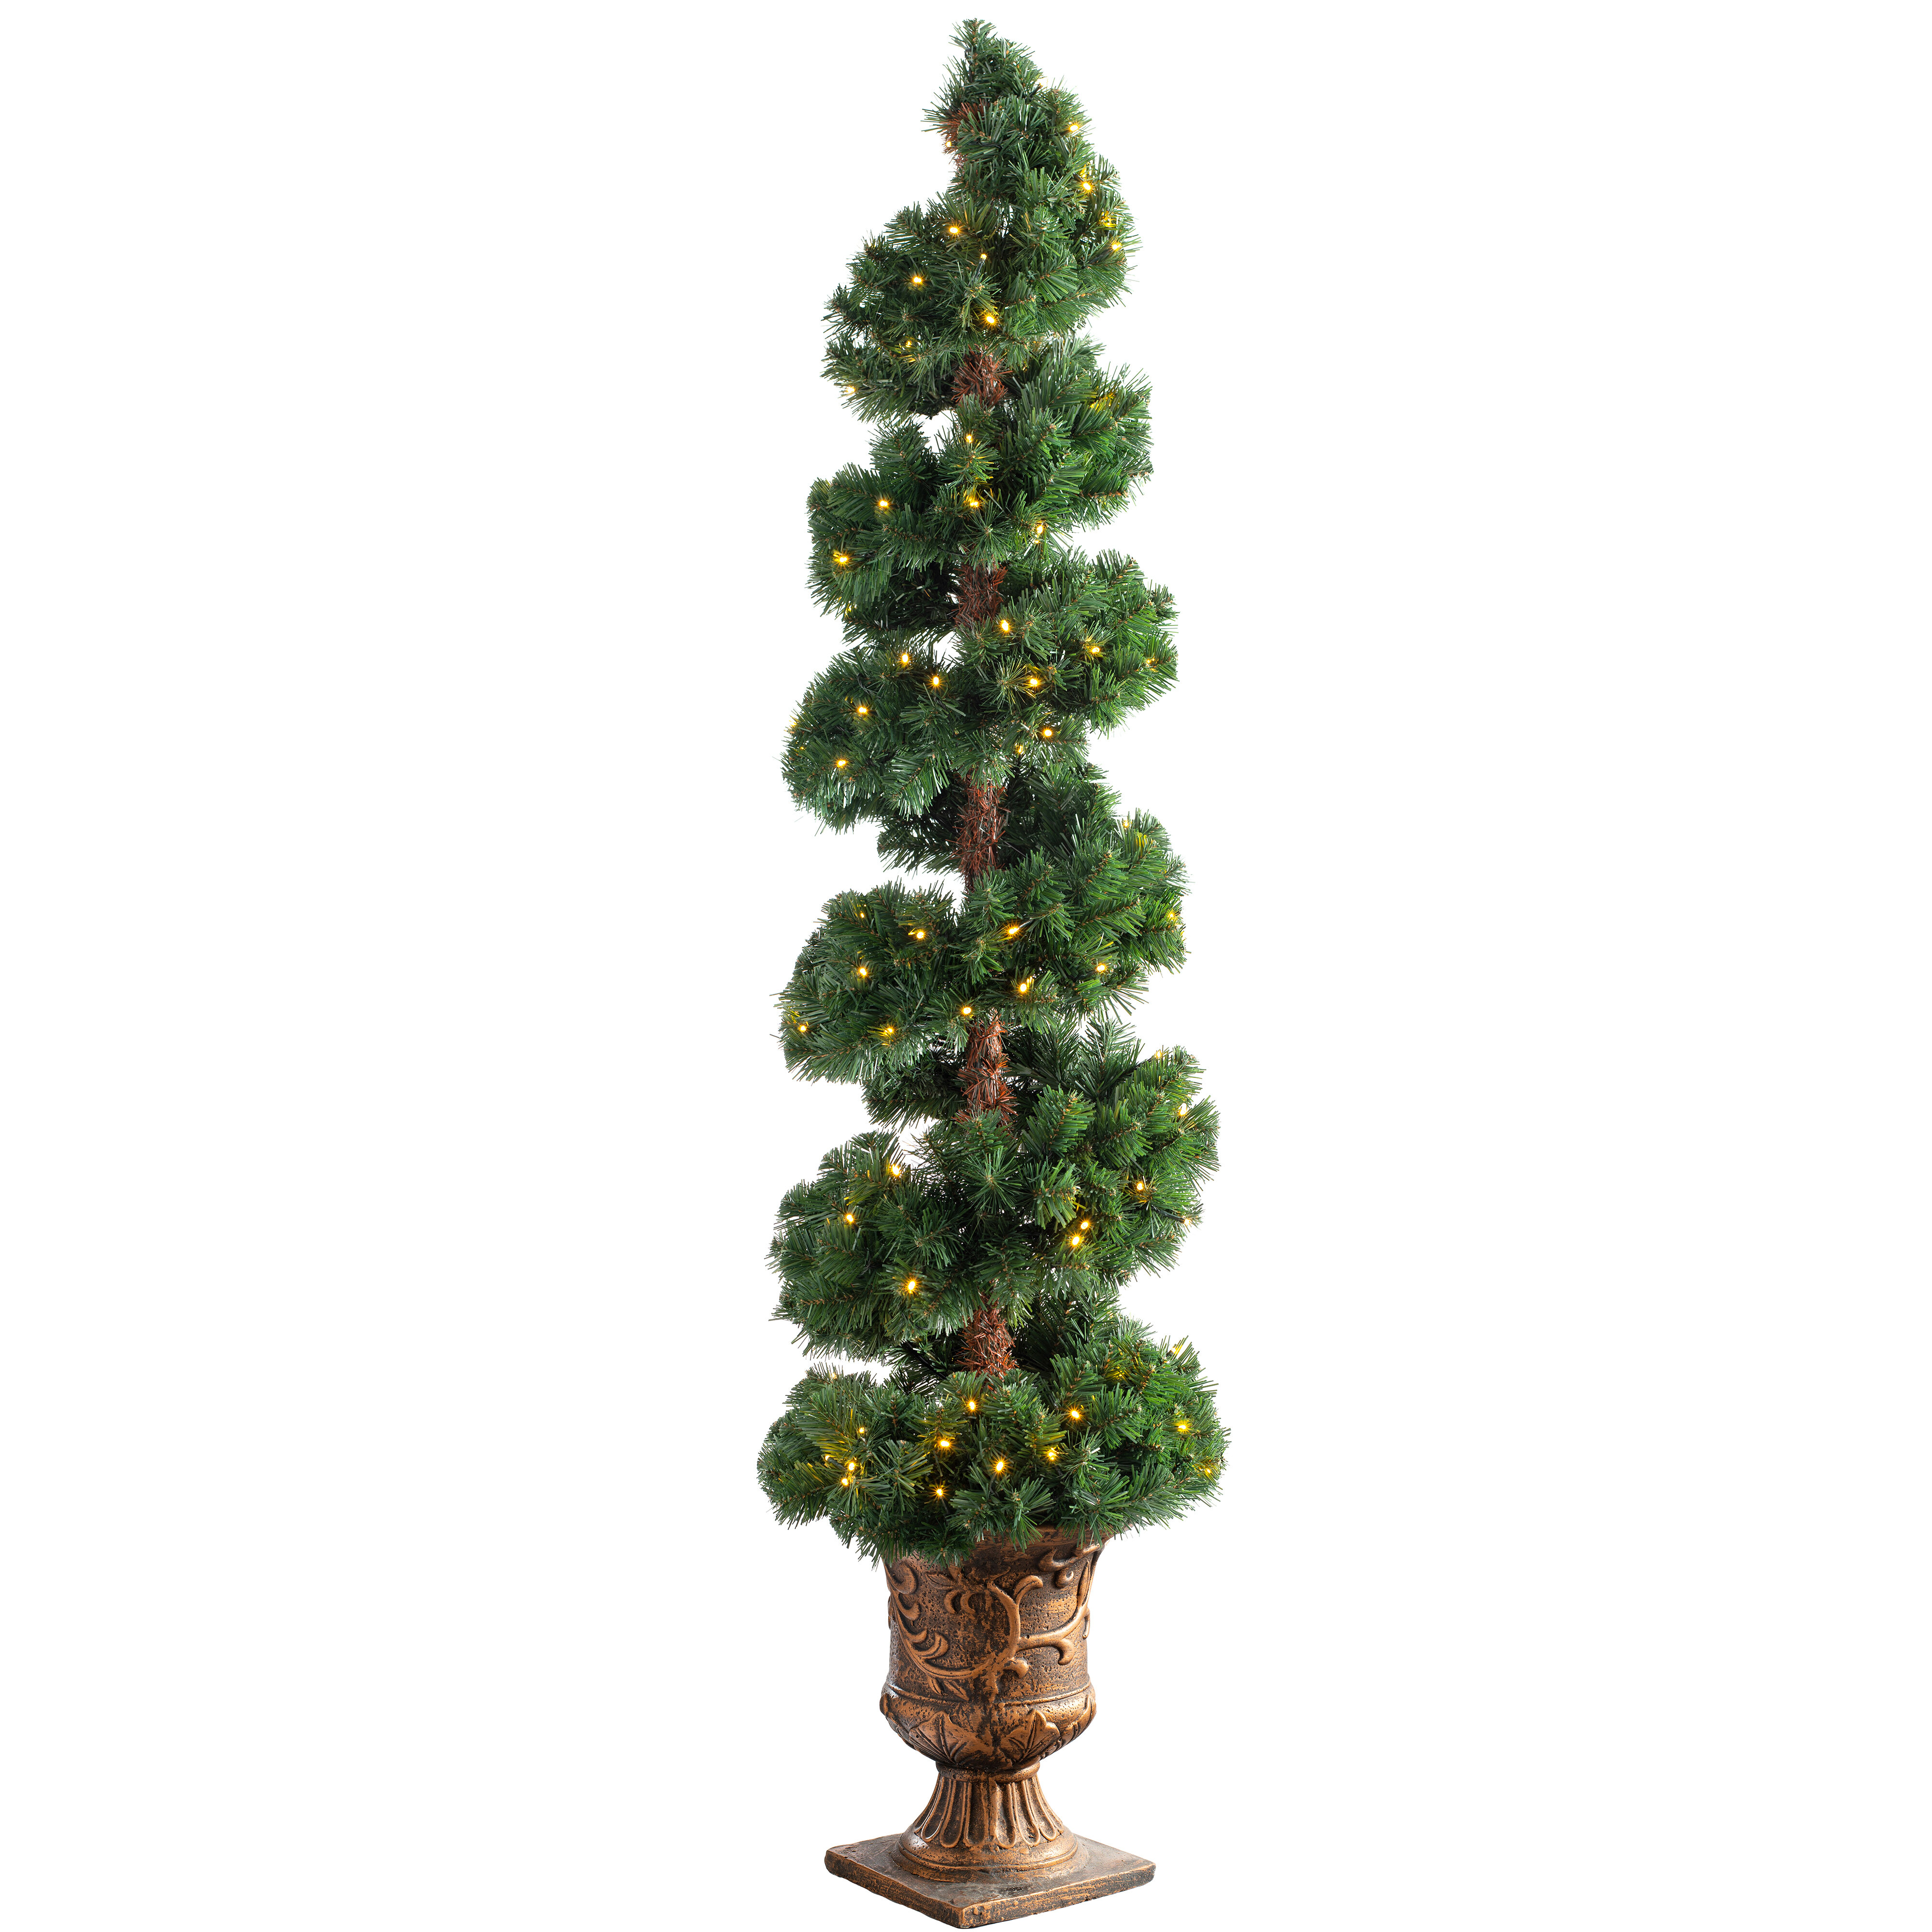 plastic green spiral christmas tree